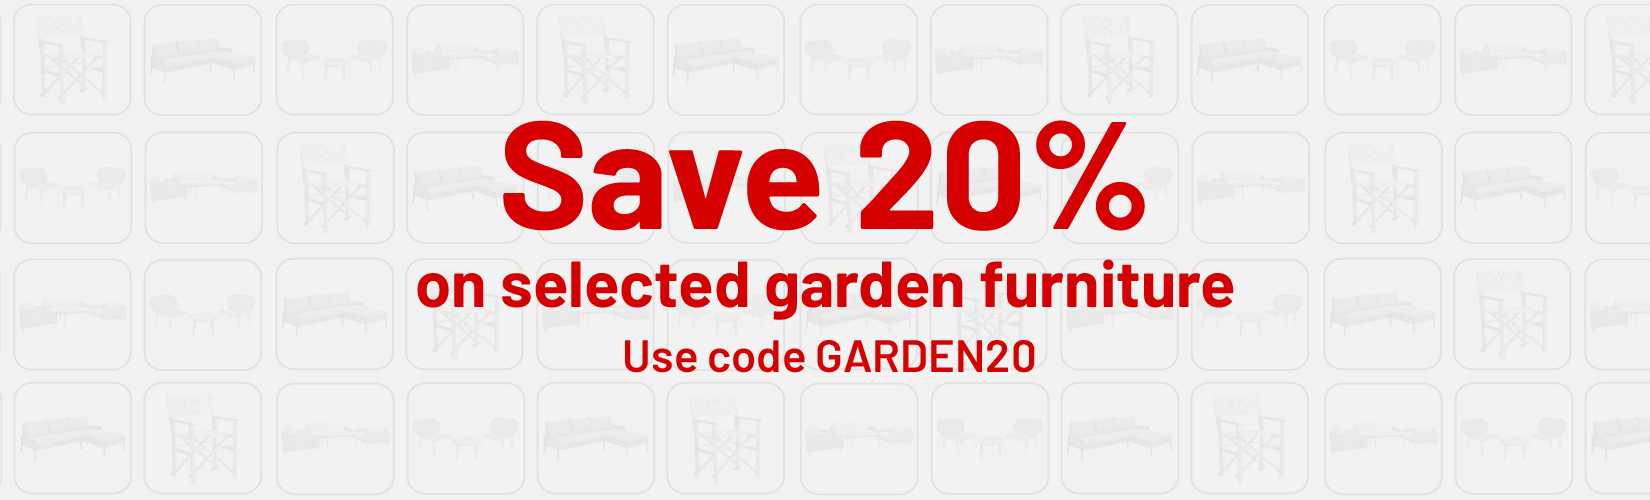 Save 20% on selected garden furniture. Use code GARDEN20.